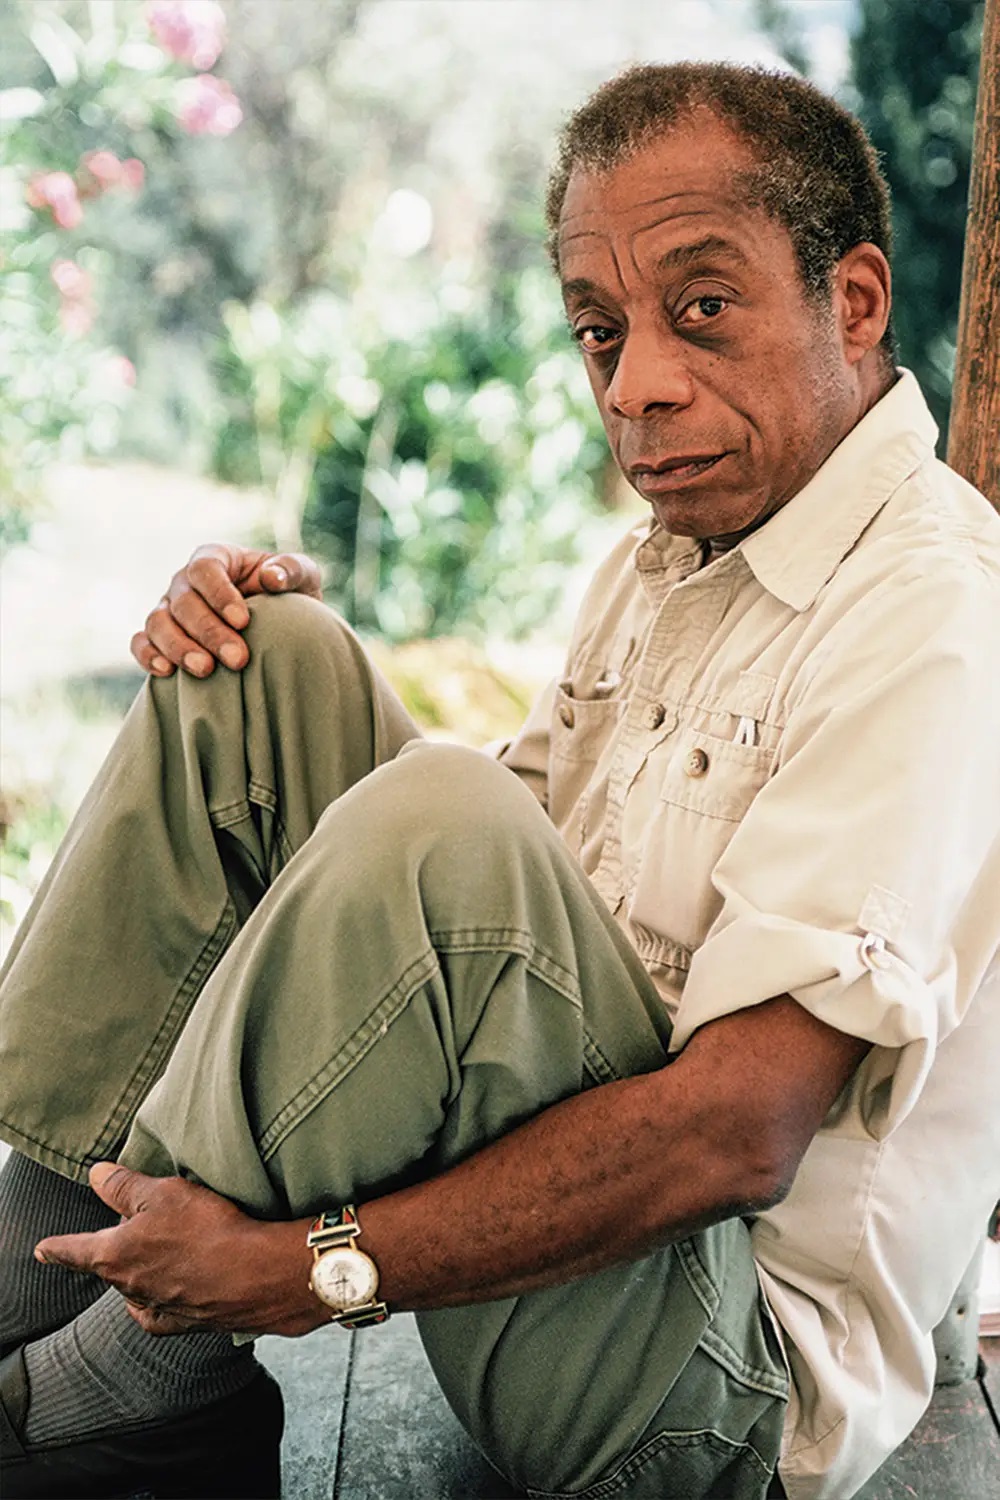 James Baldwin biopic